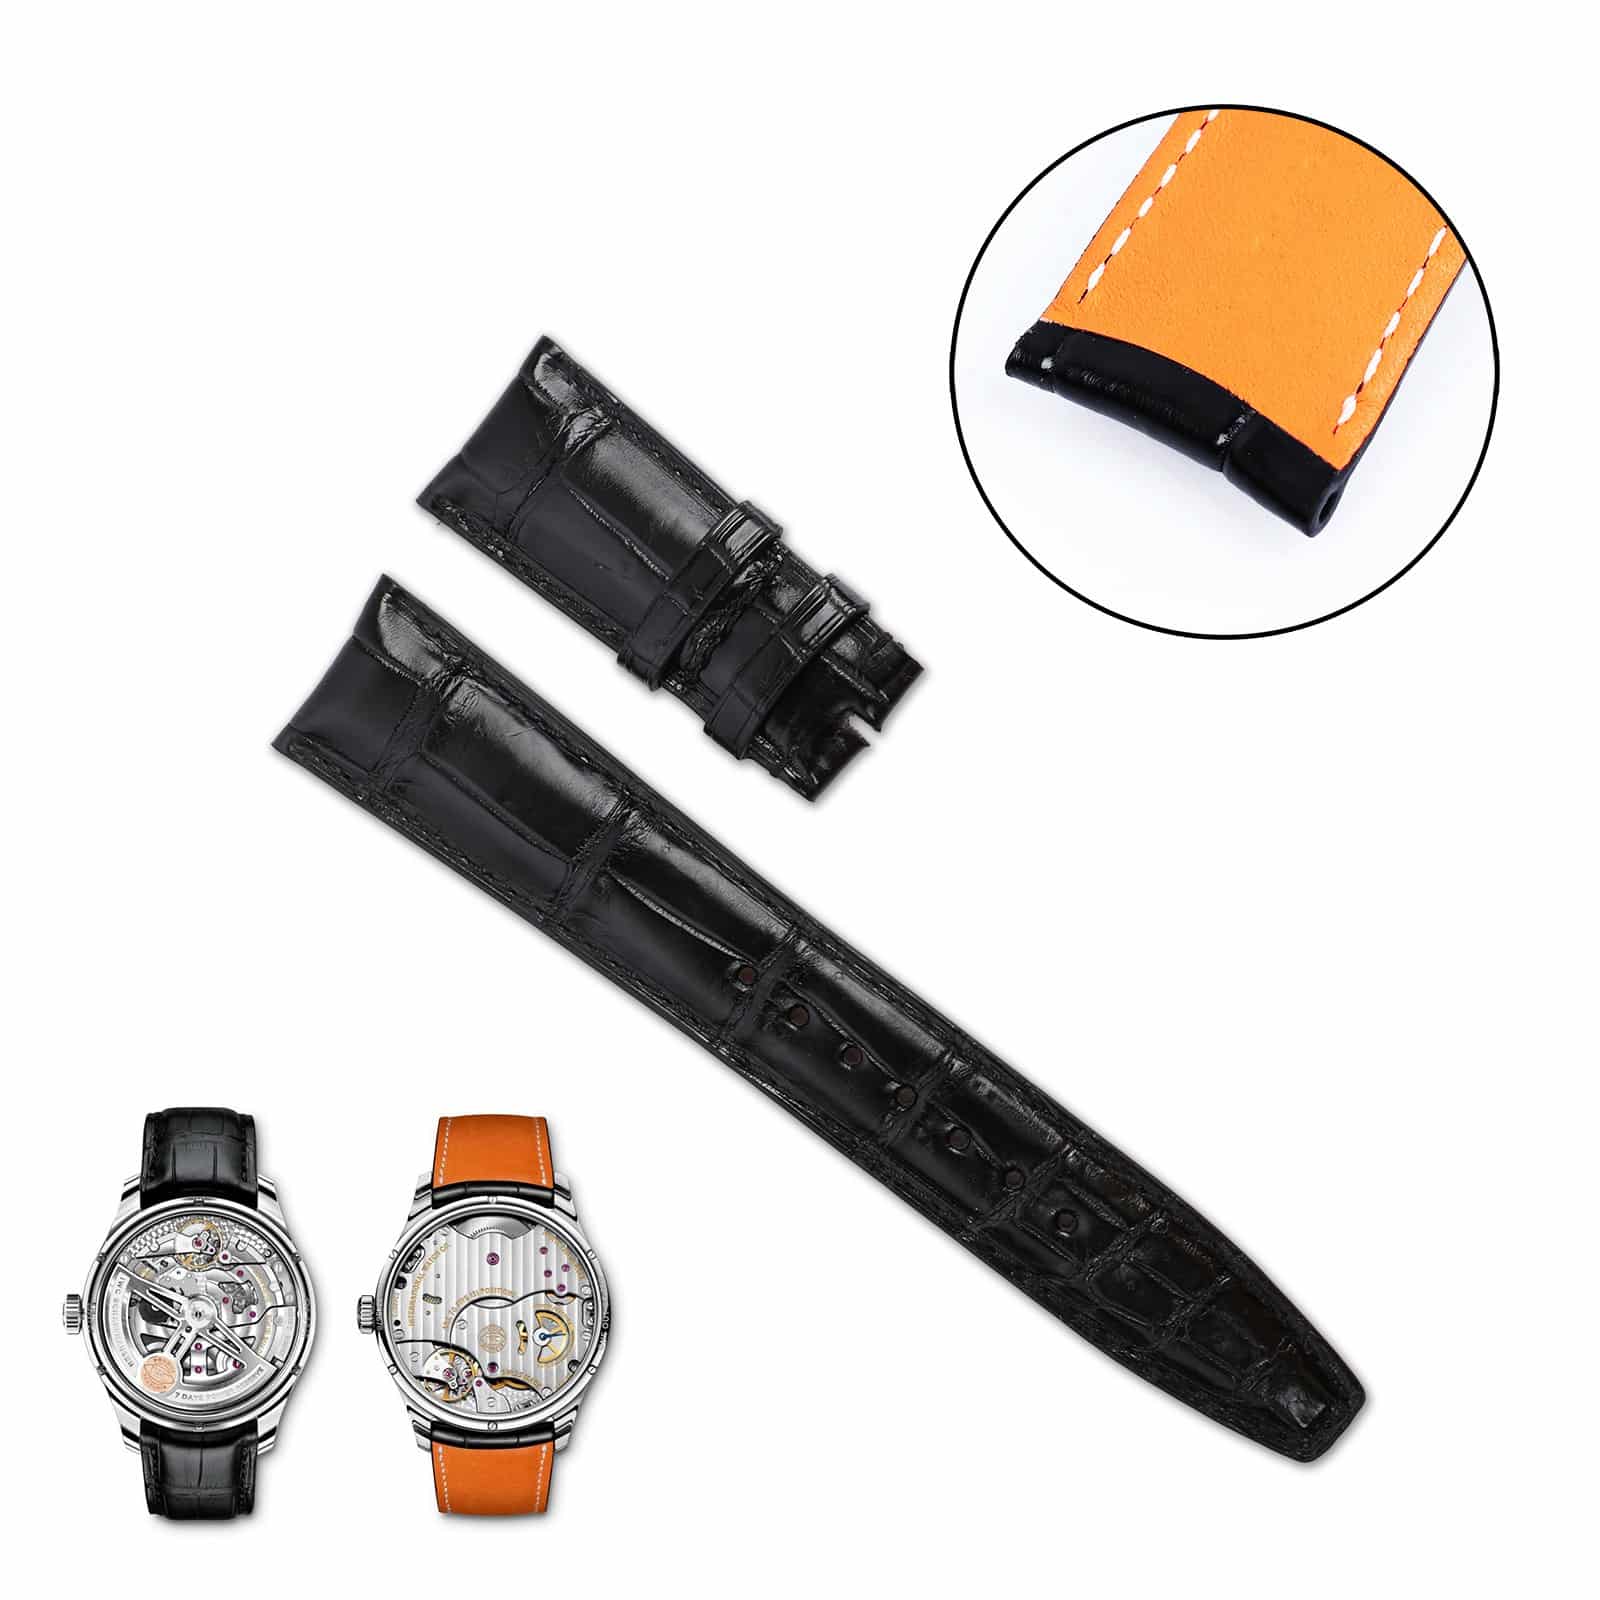 IWC Santoni Black Alligator leather strap replacement watchband orange inner